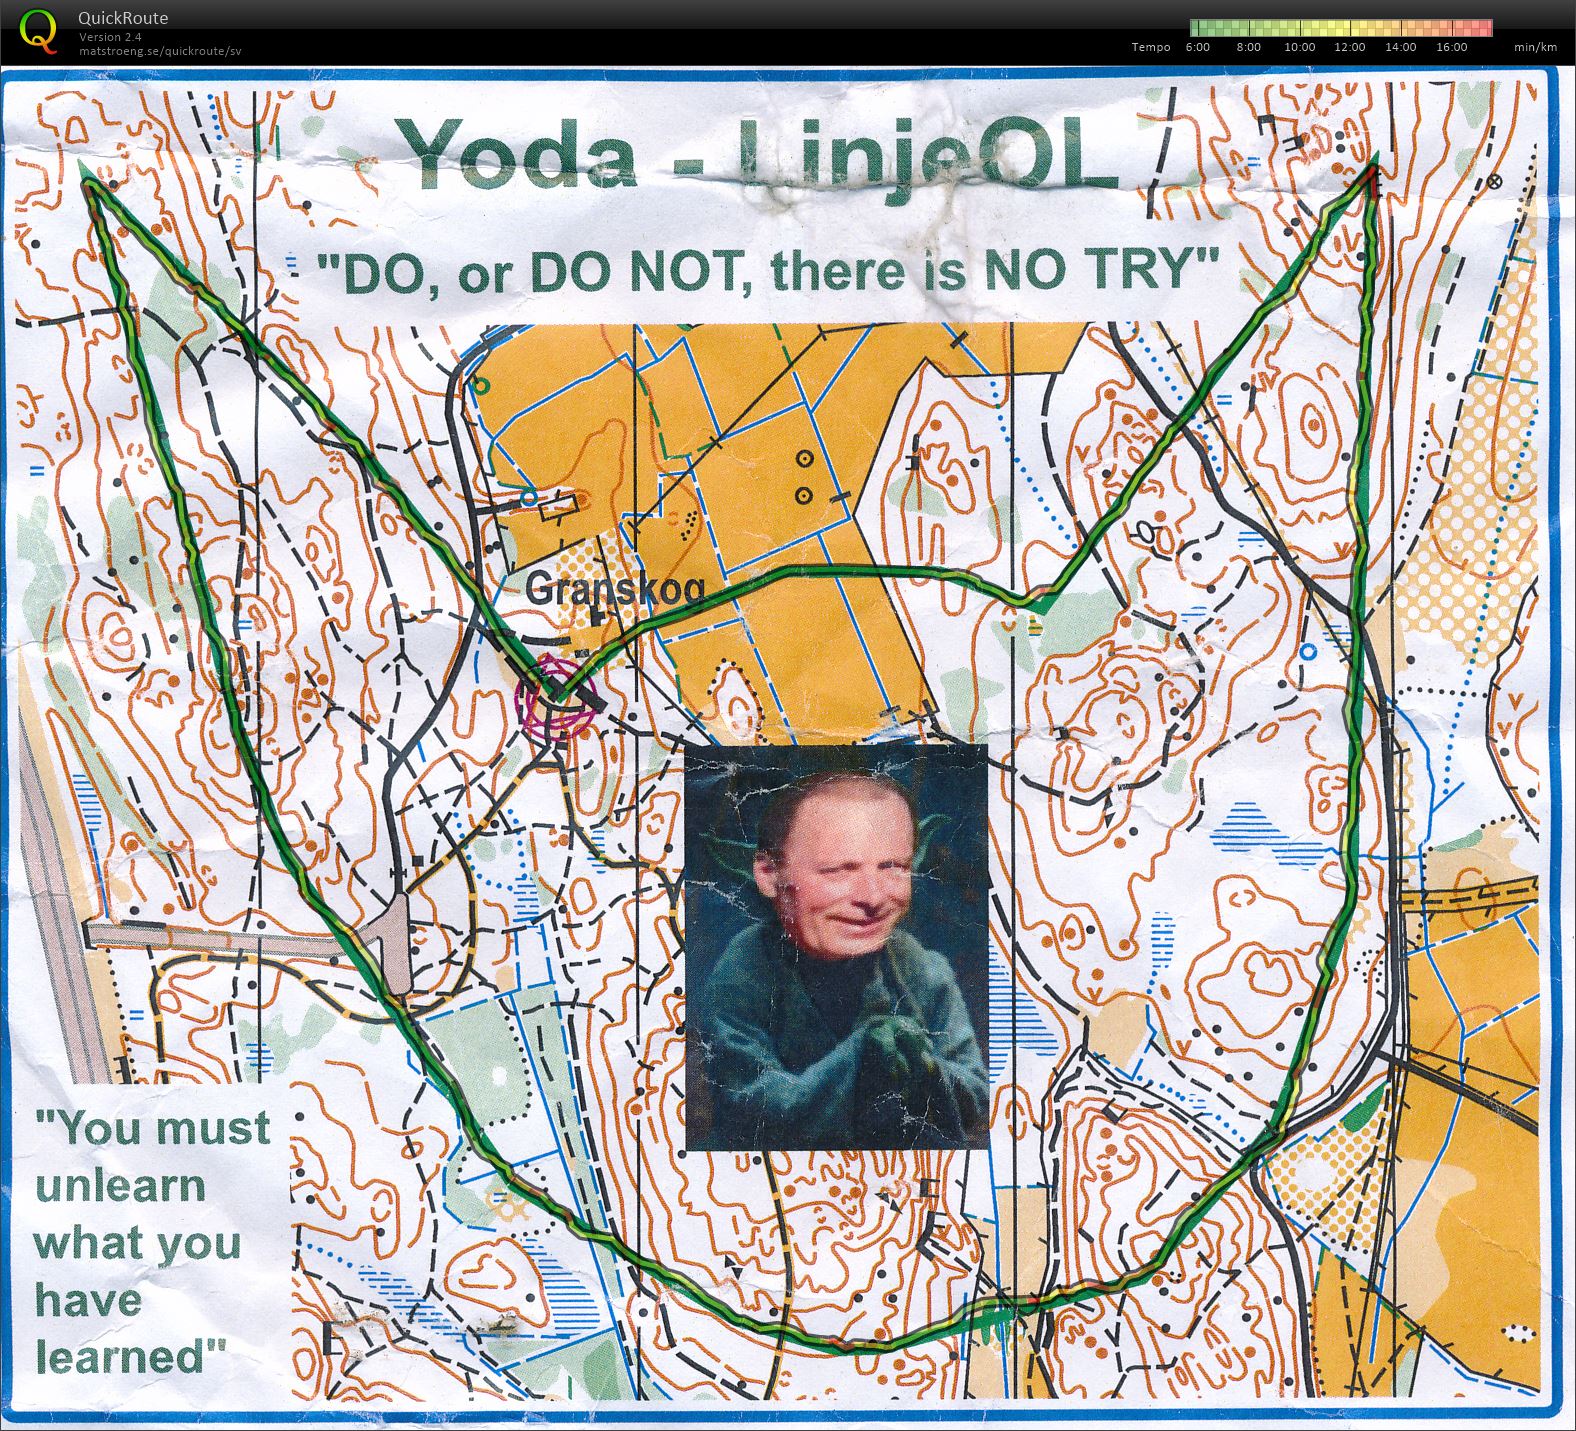 Yoda - linjeOL (18-06-2016)